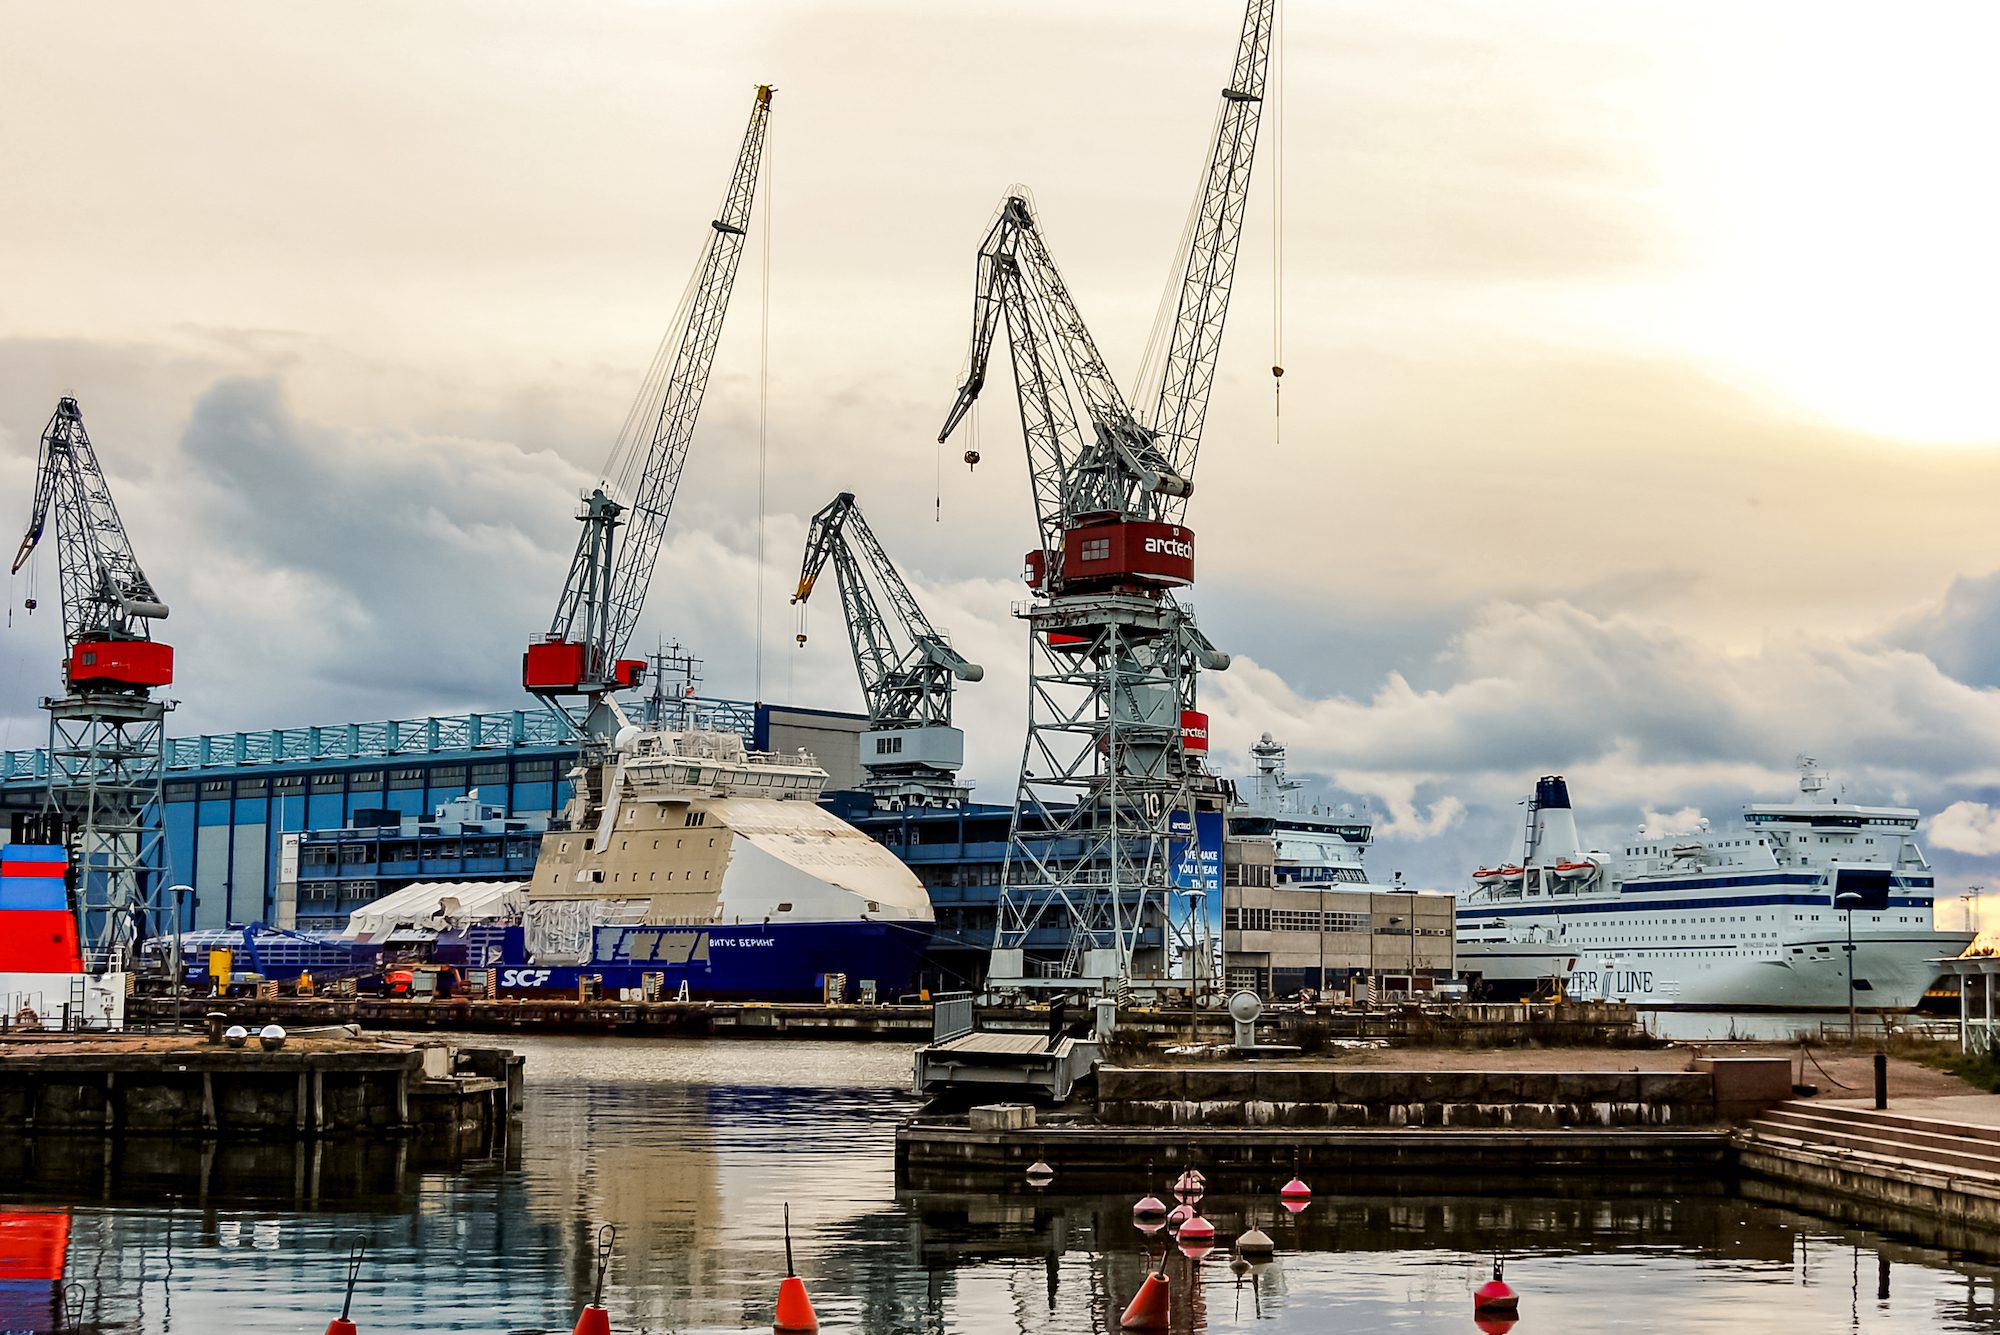 Helsinki Shipyard pictured in 2012